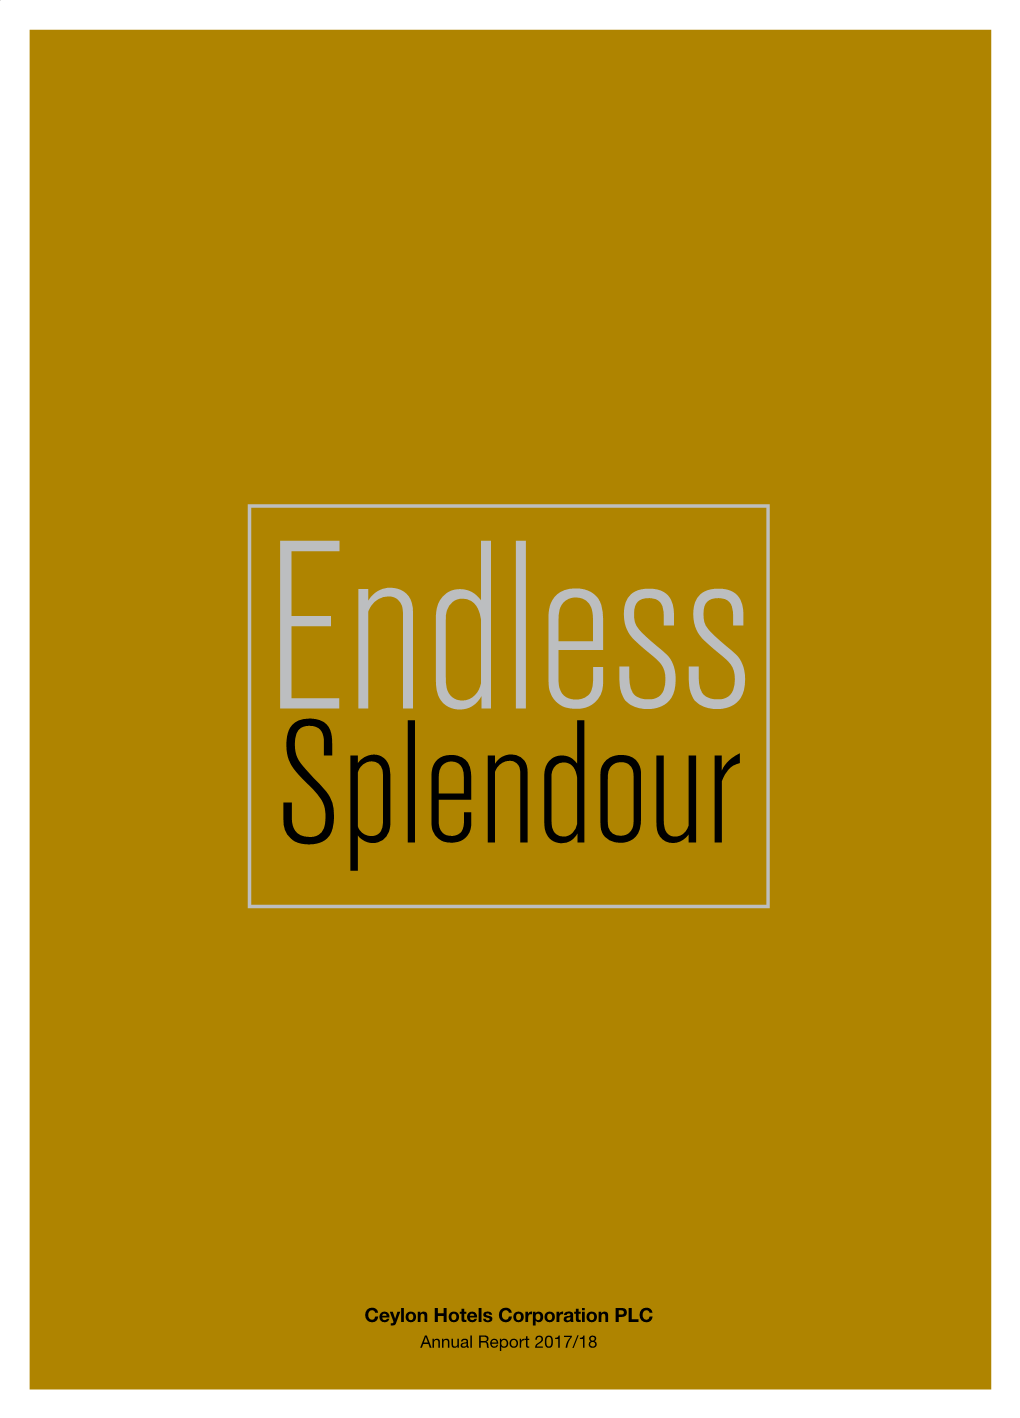 Ceylon Hotels Corporation PLC Annual Report 2017/18 Endless Splendour